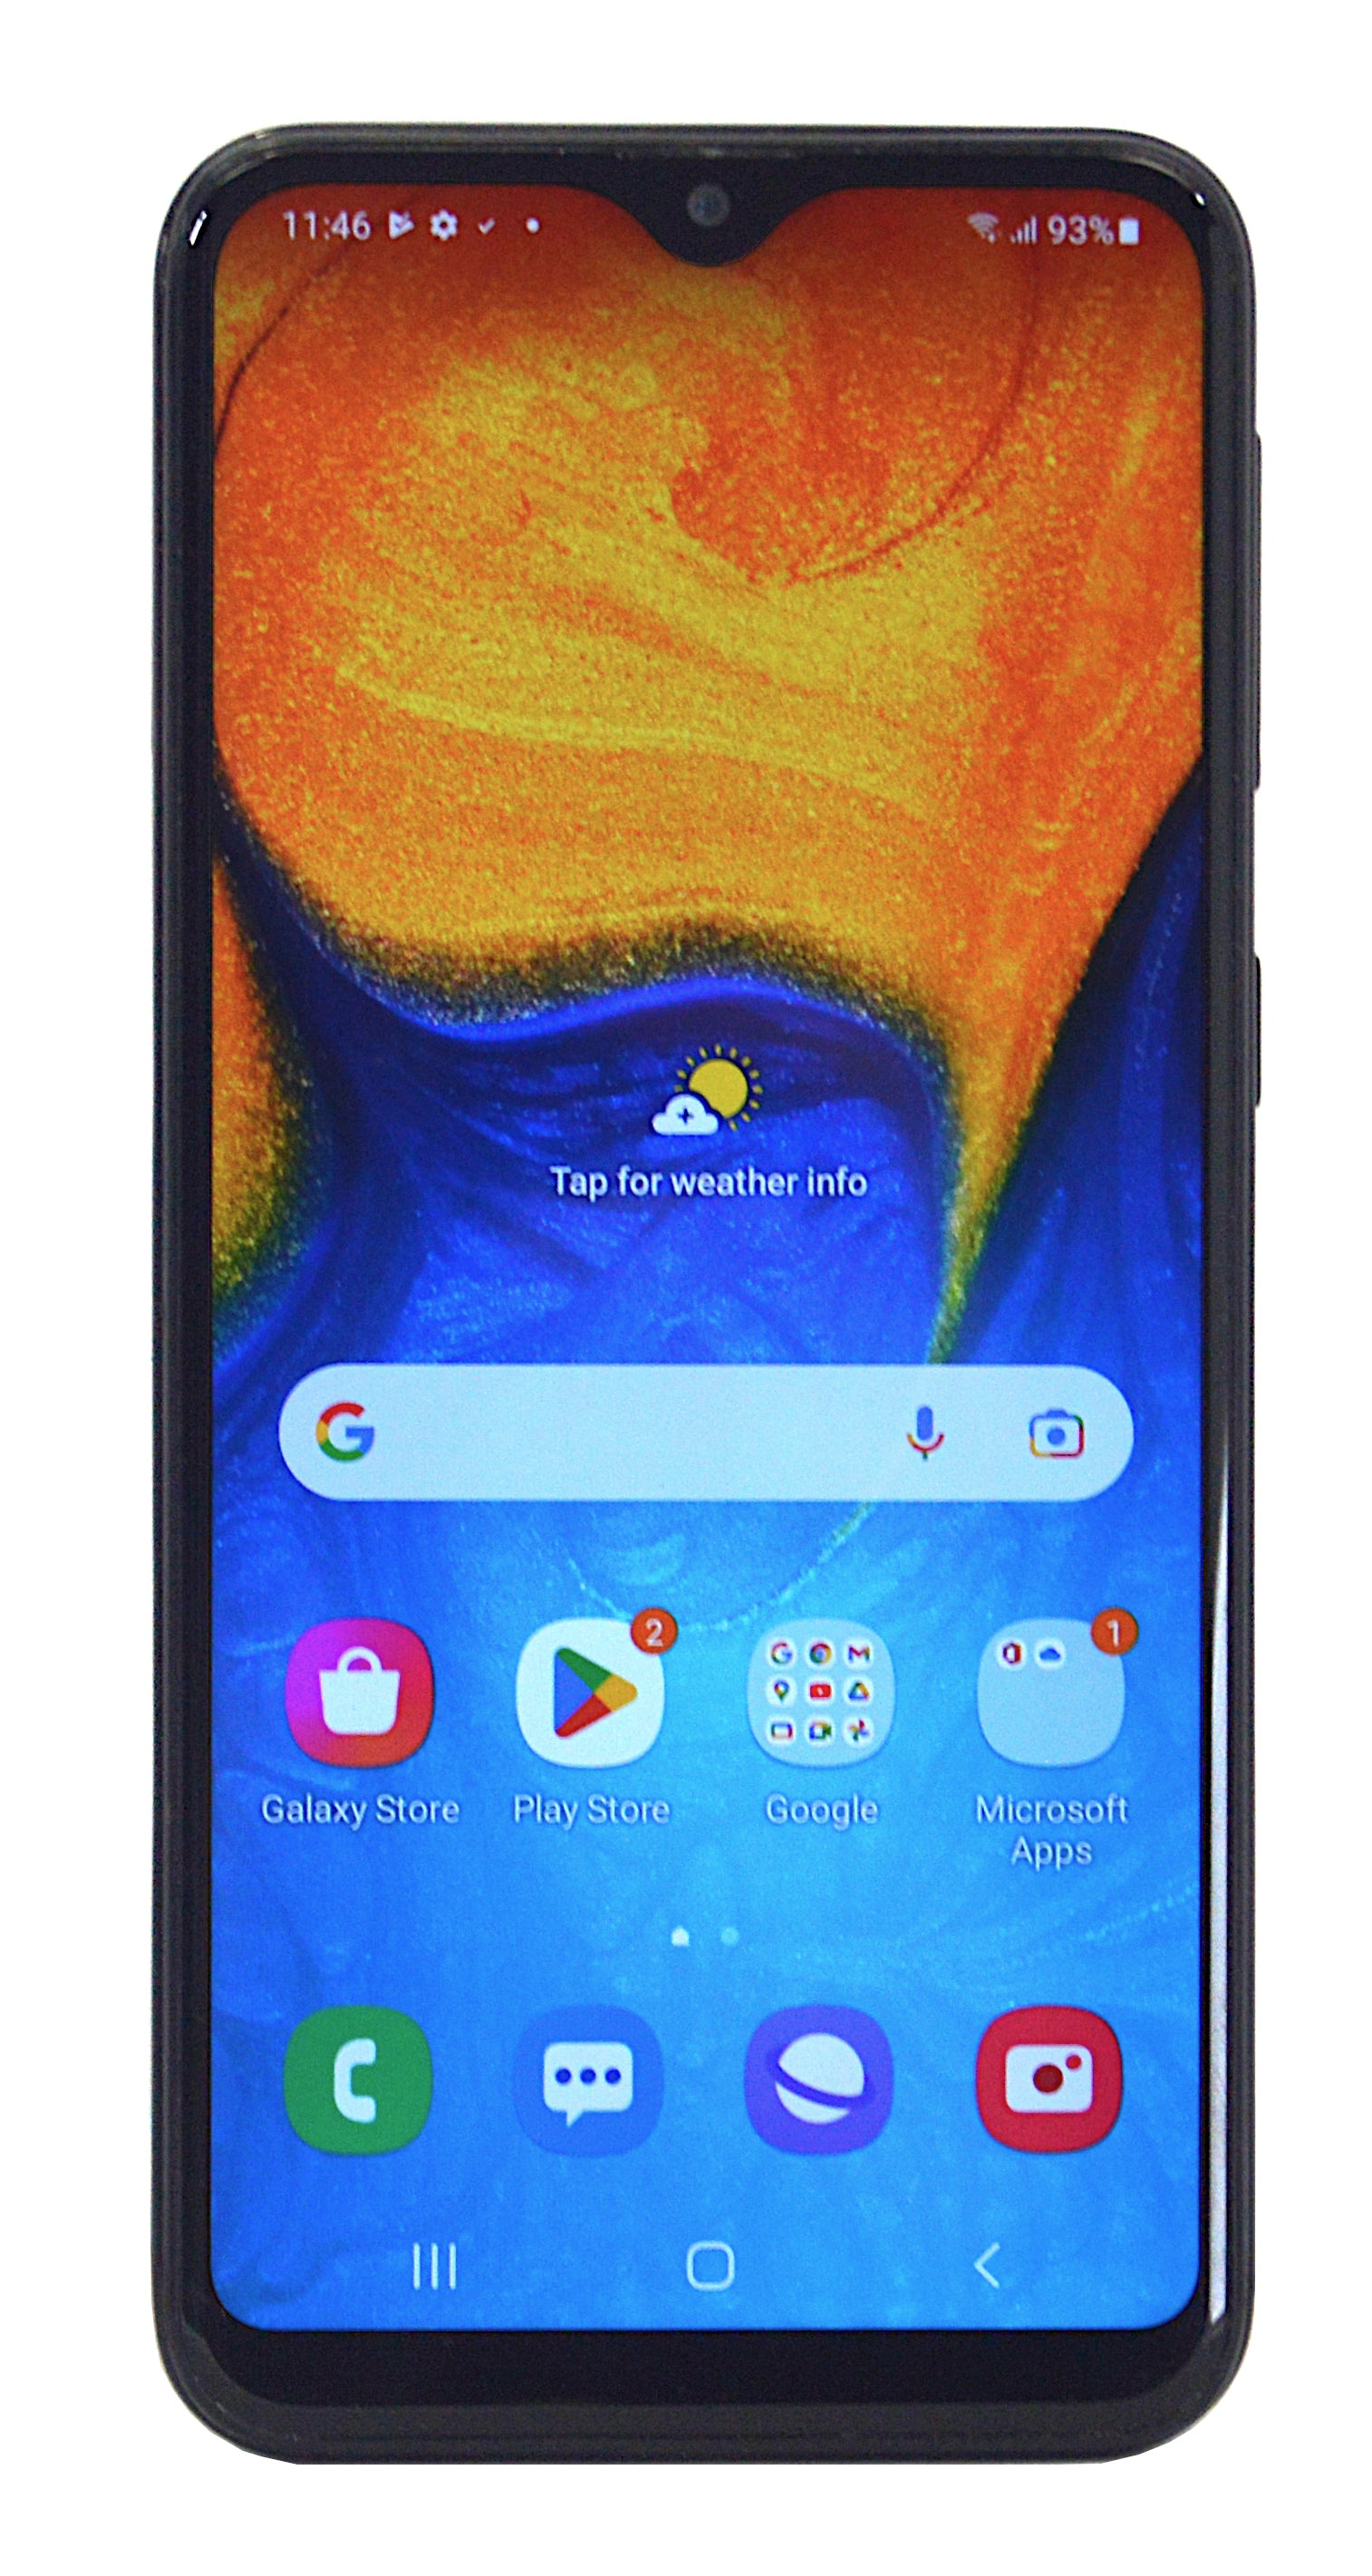 Samsung Galaxy A20e Smartphone, 32GB, Dual Sim, Vodafone, Black, SM-A202F/DS